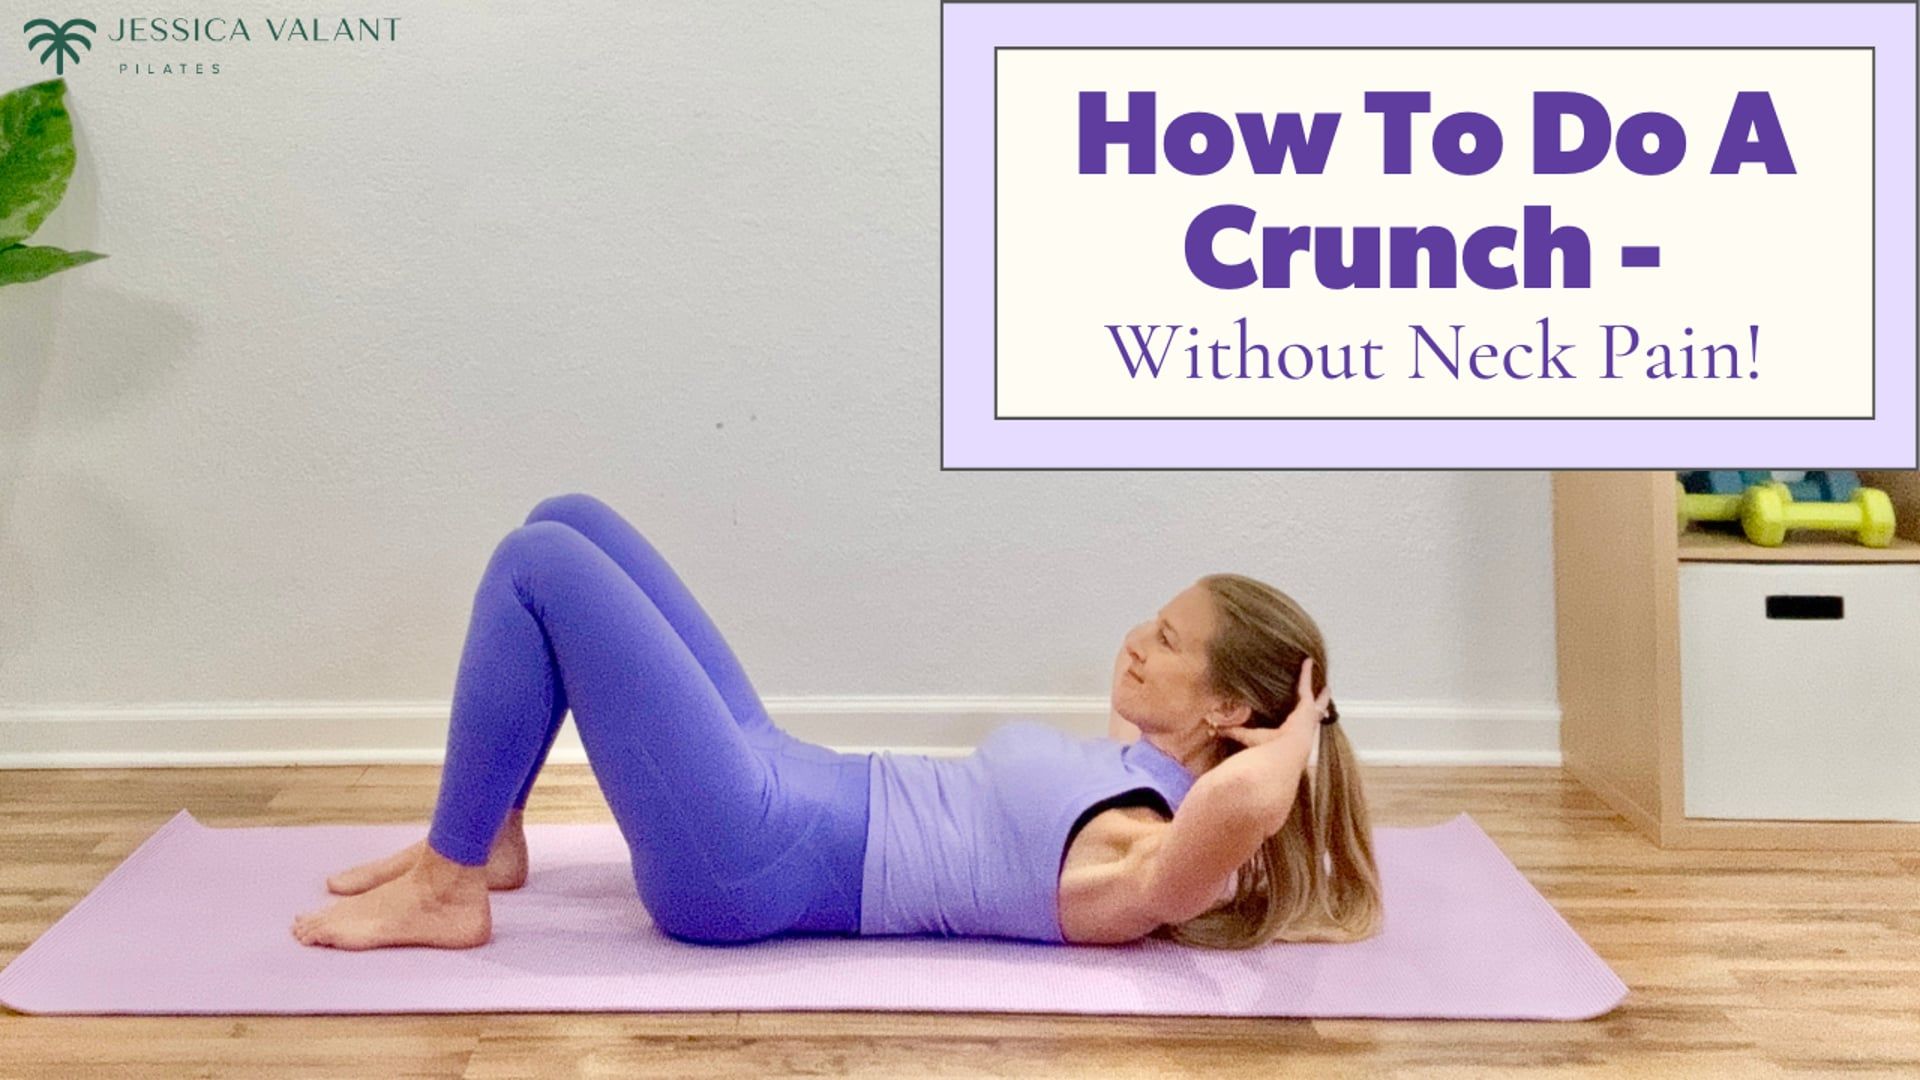 Crunch Fitness Locations on Vimeo